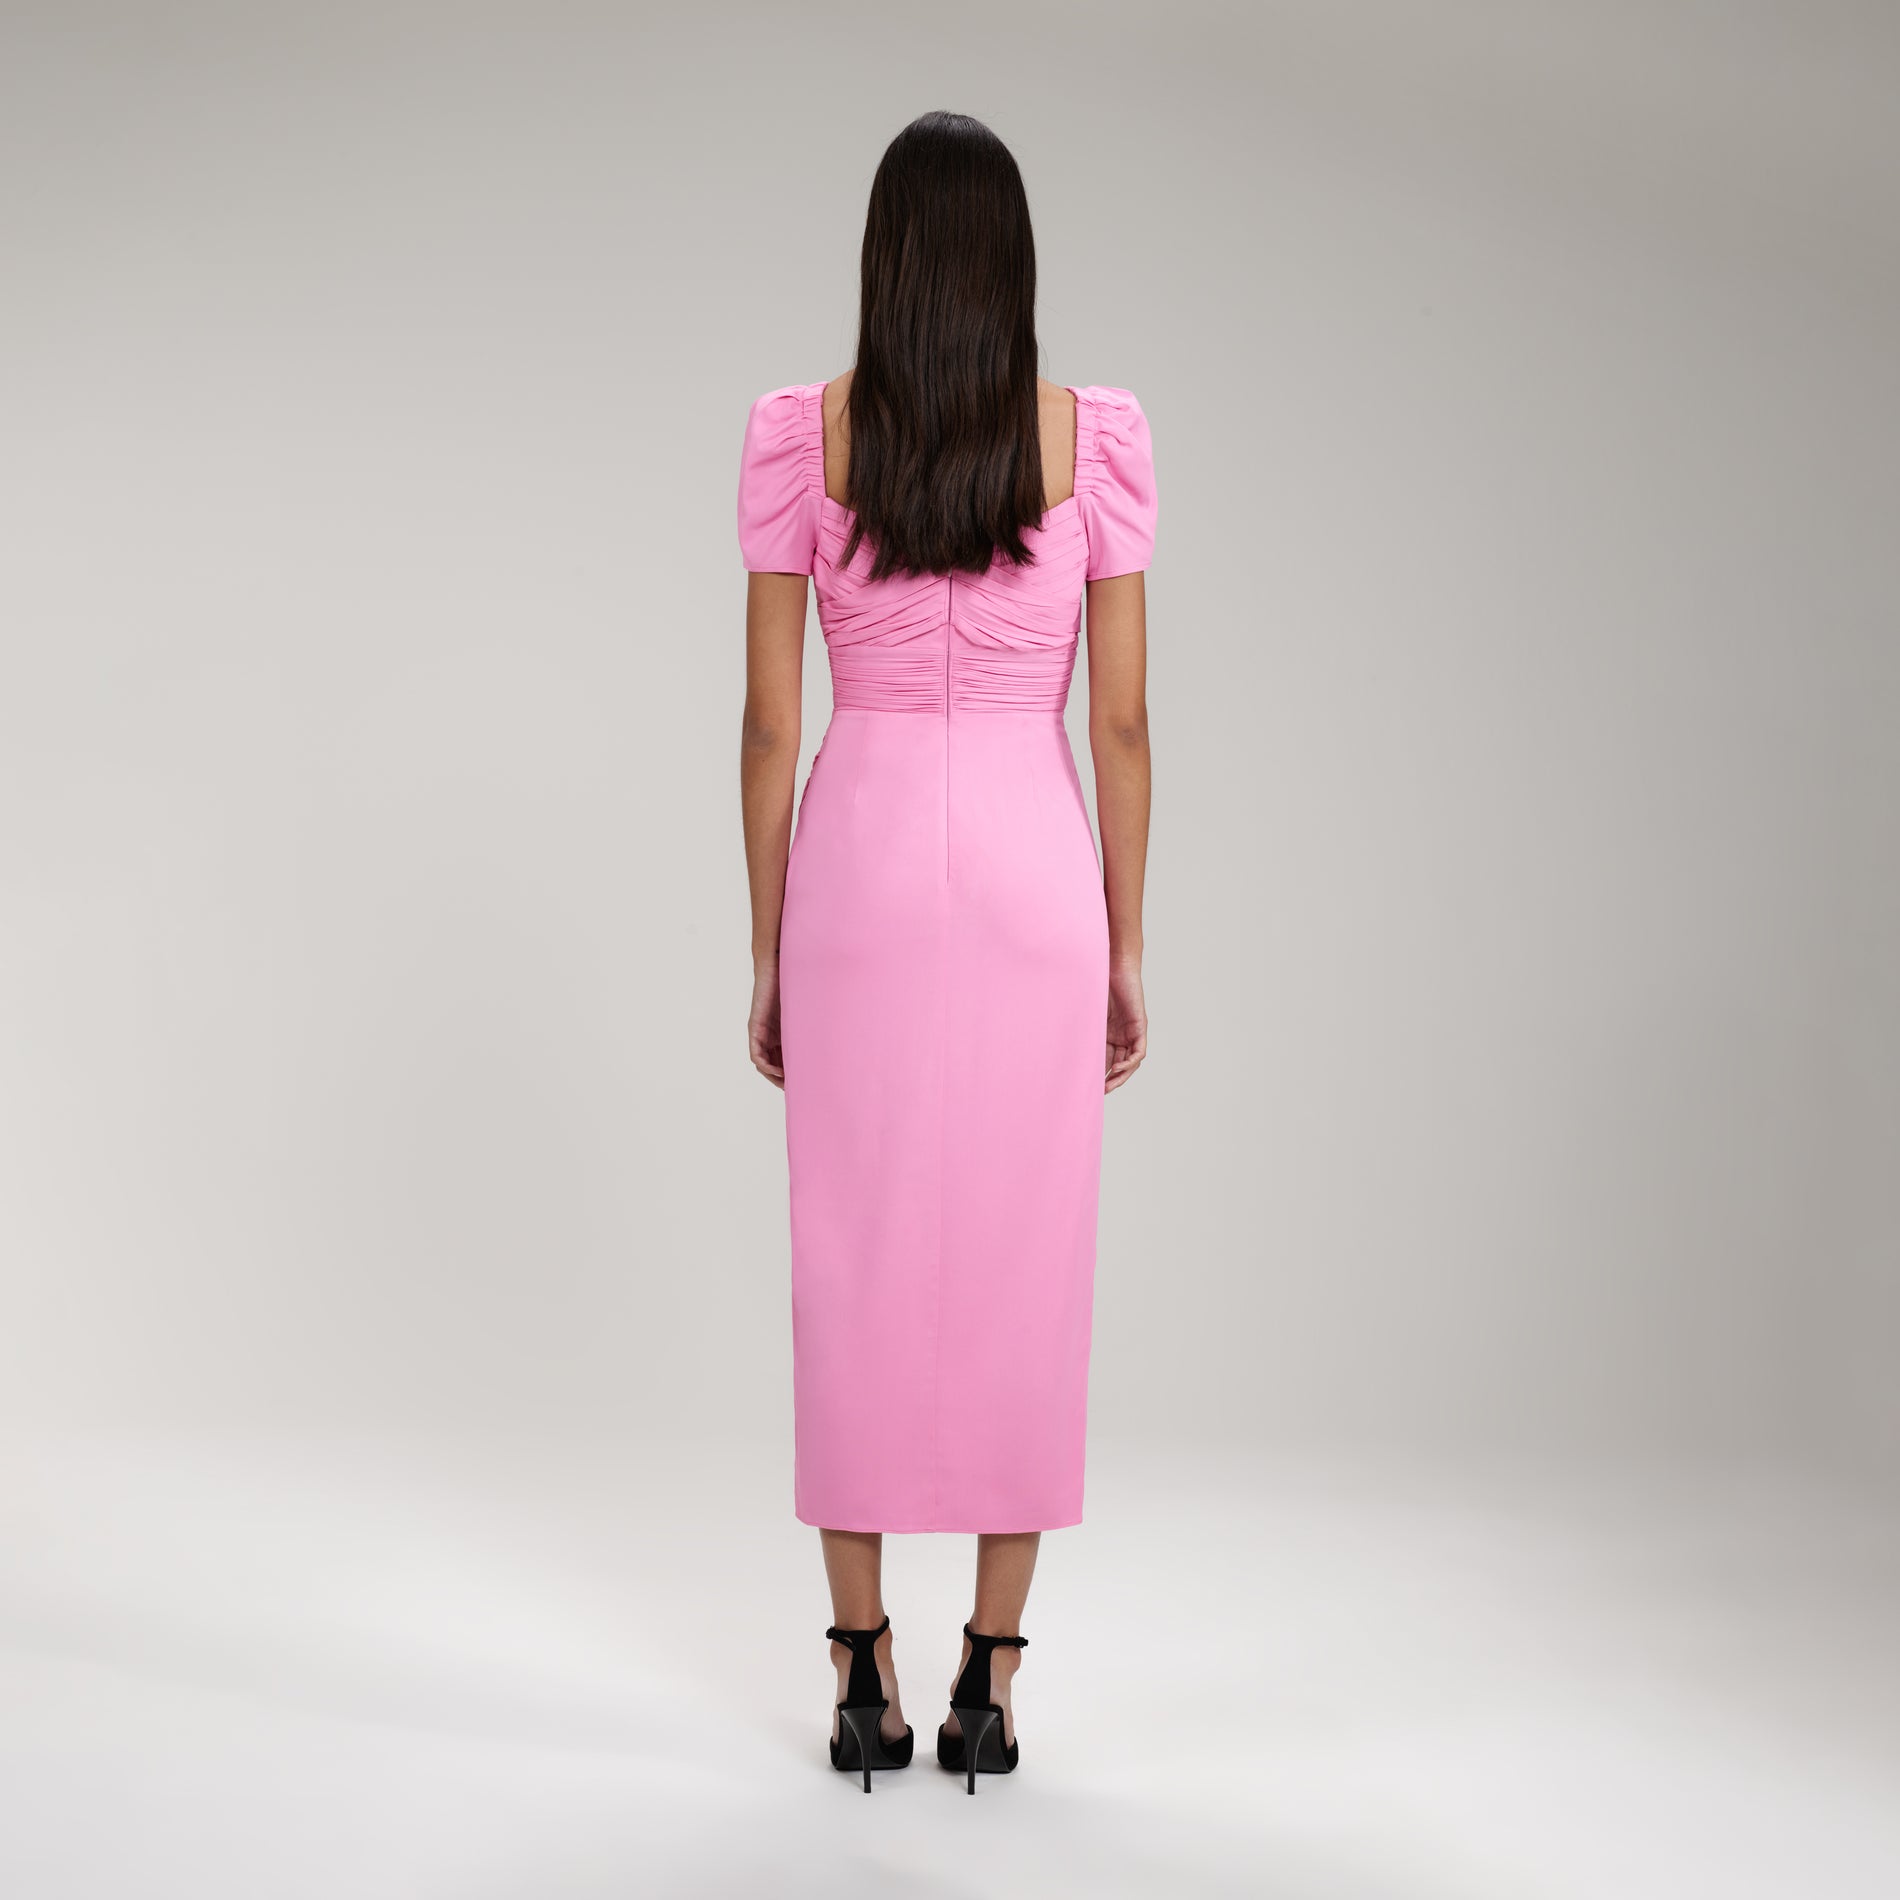 A woman wearing the Pink Iris Midi Dress